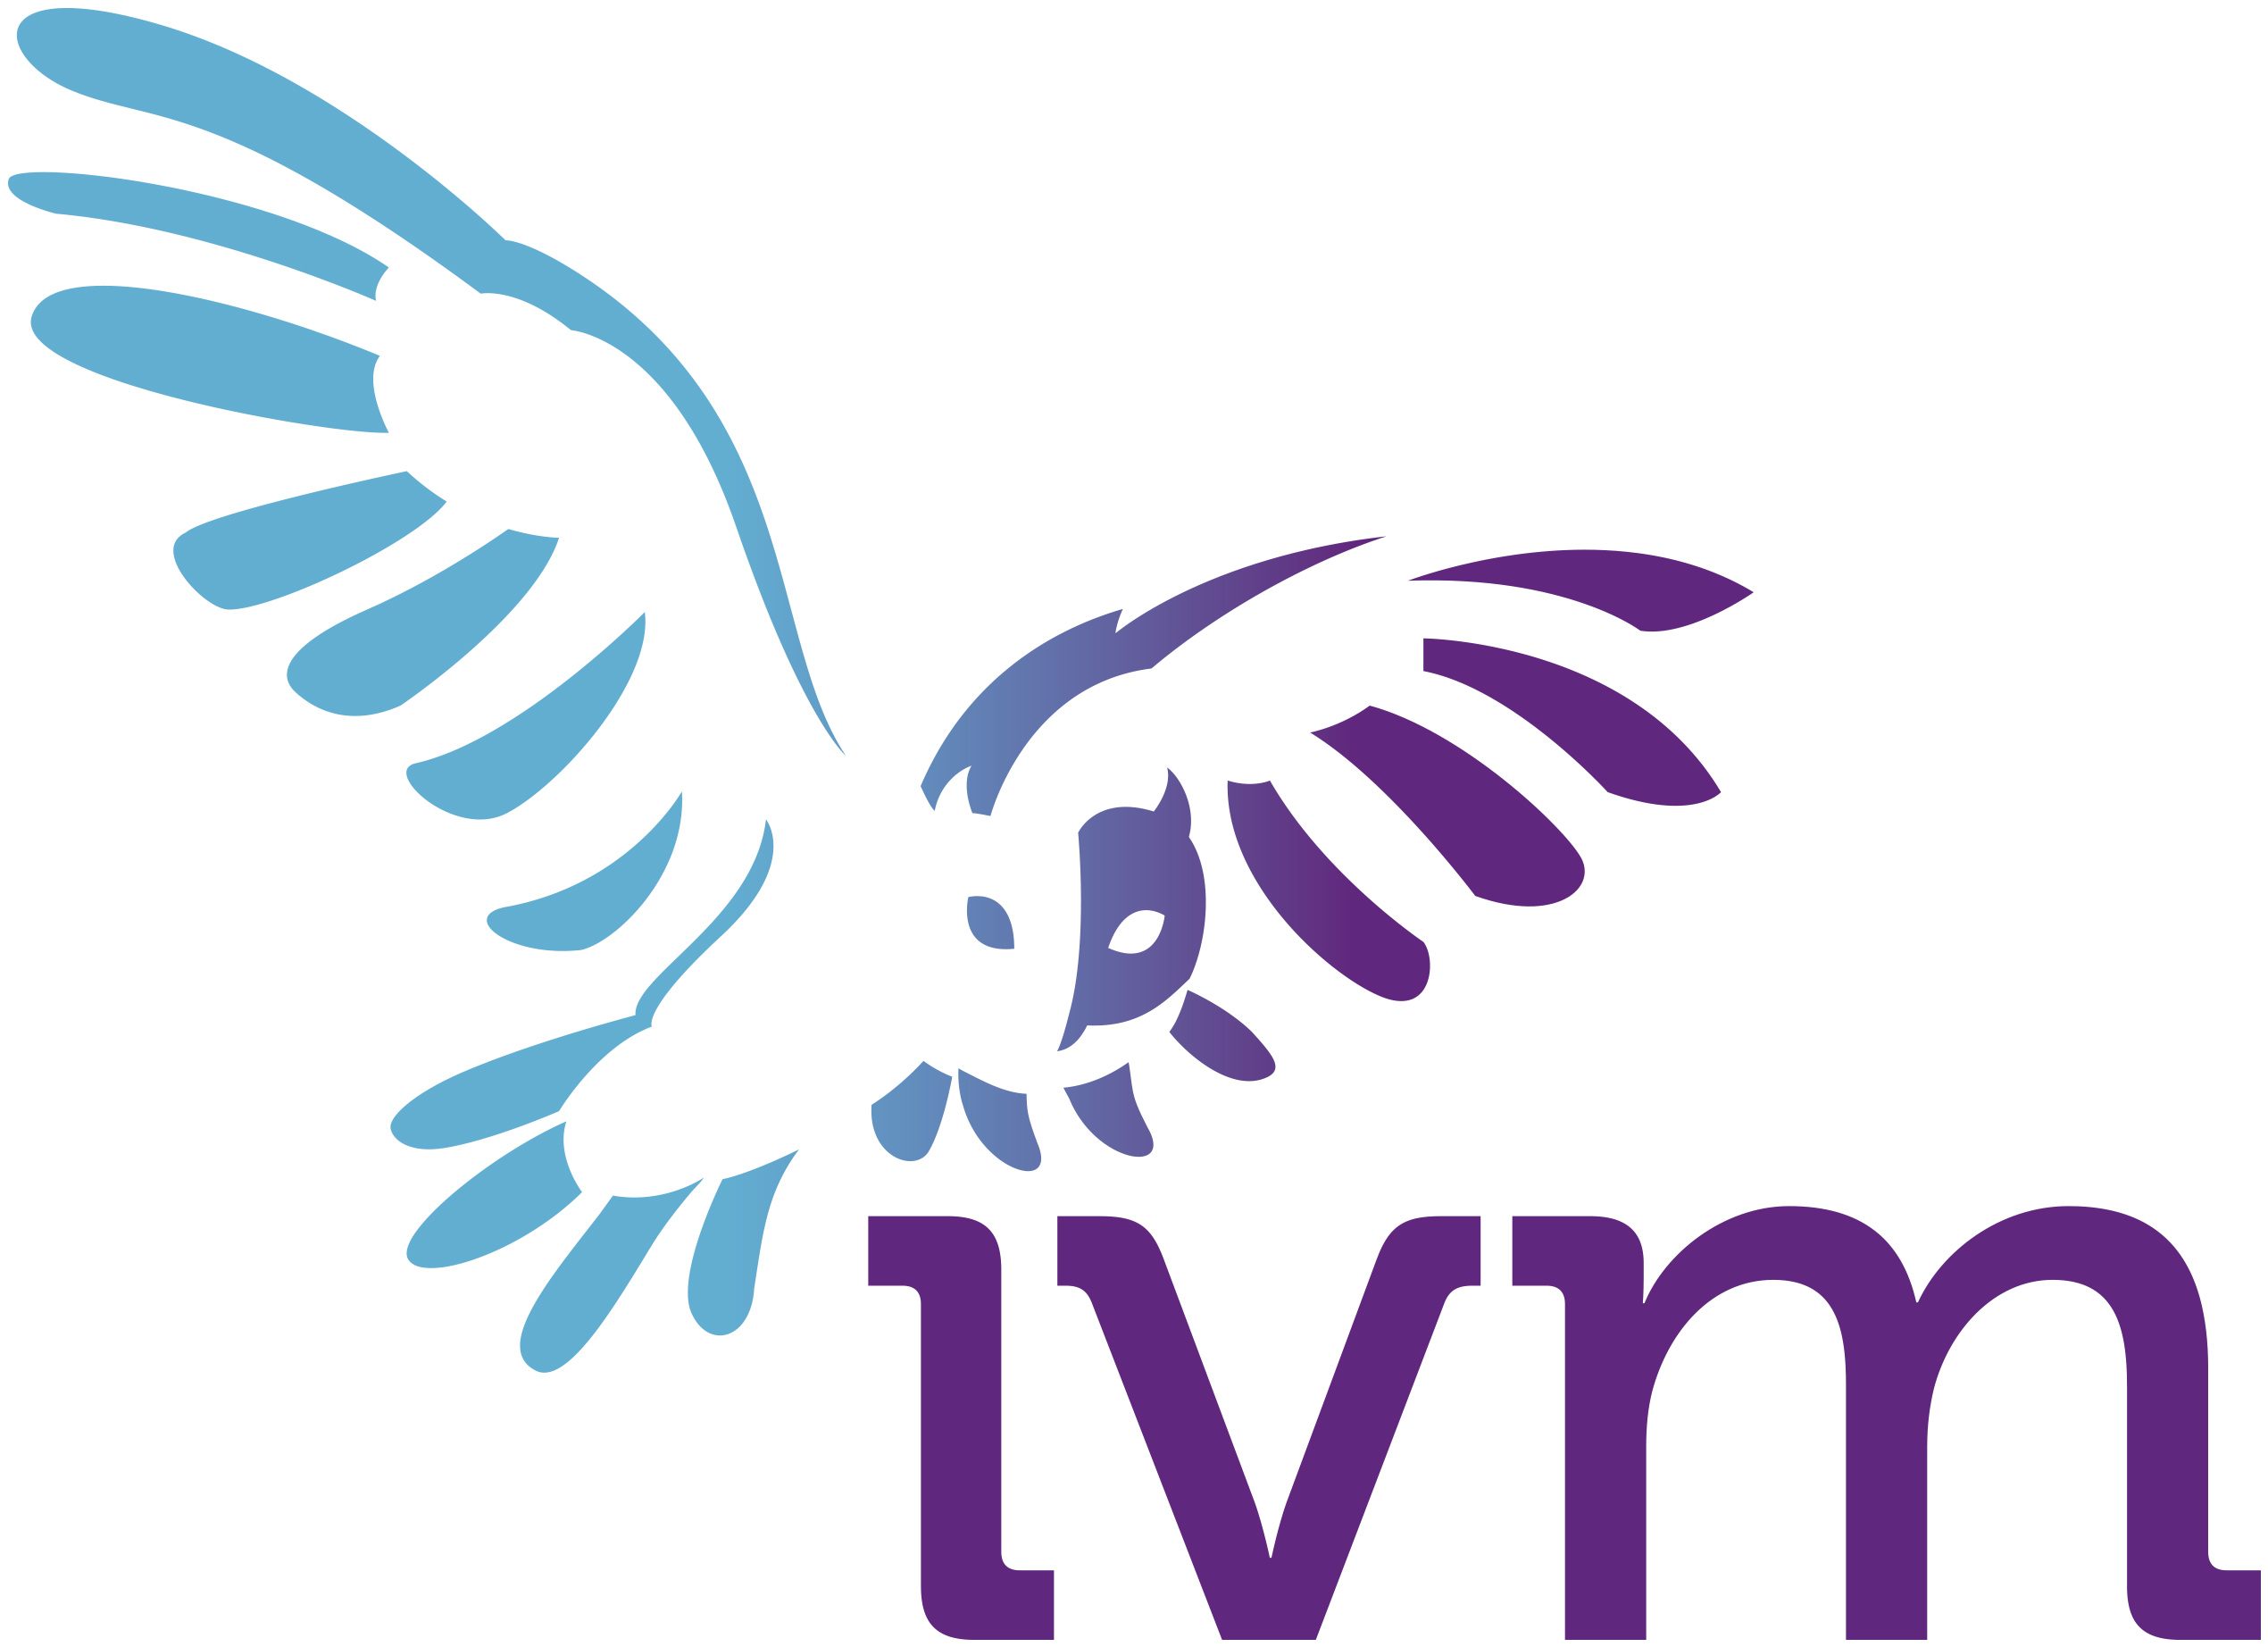 IVM logo